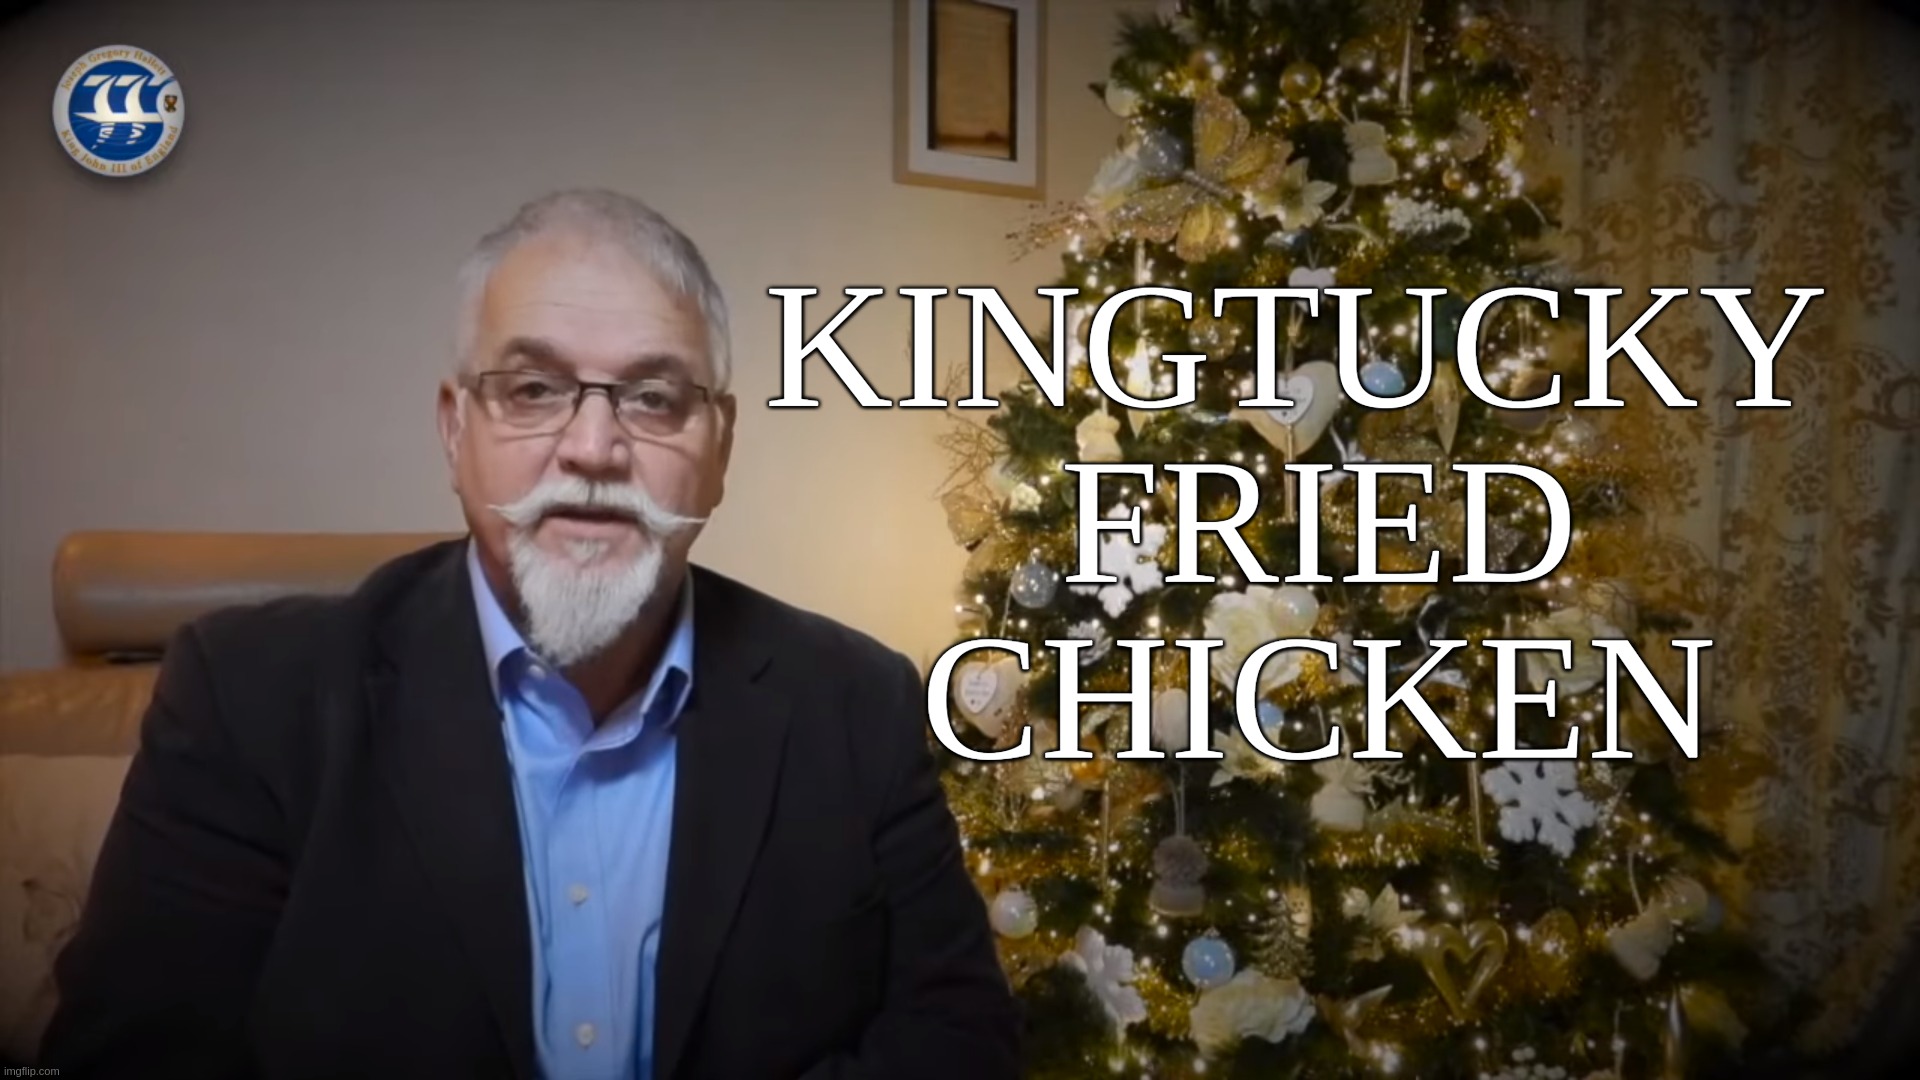 Kingtucky Fried Chicken | KINGTUCKY 
FRIED
CHICKEN | image tagged in kentucky fried chicken,kfc,john,third,king,joseph gregory hallett | made w/ Imgflip meme maker